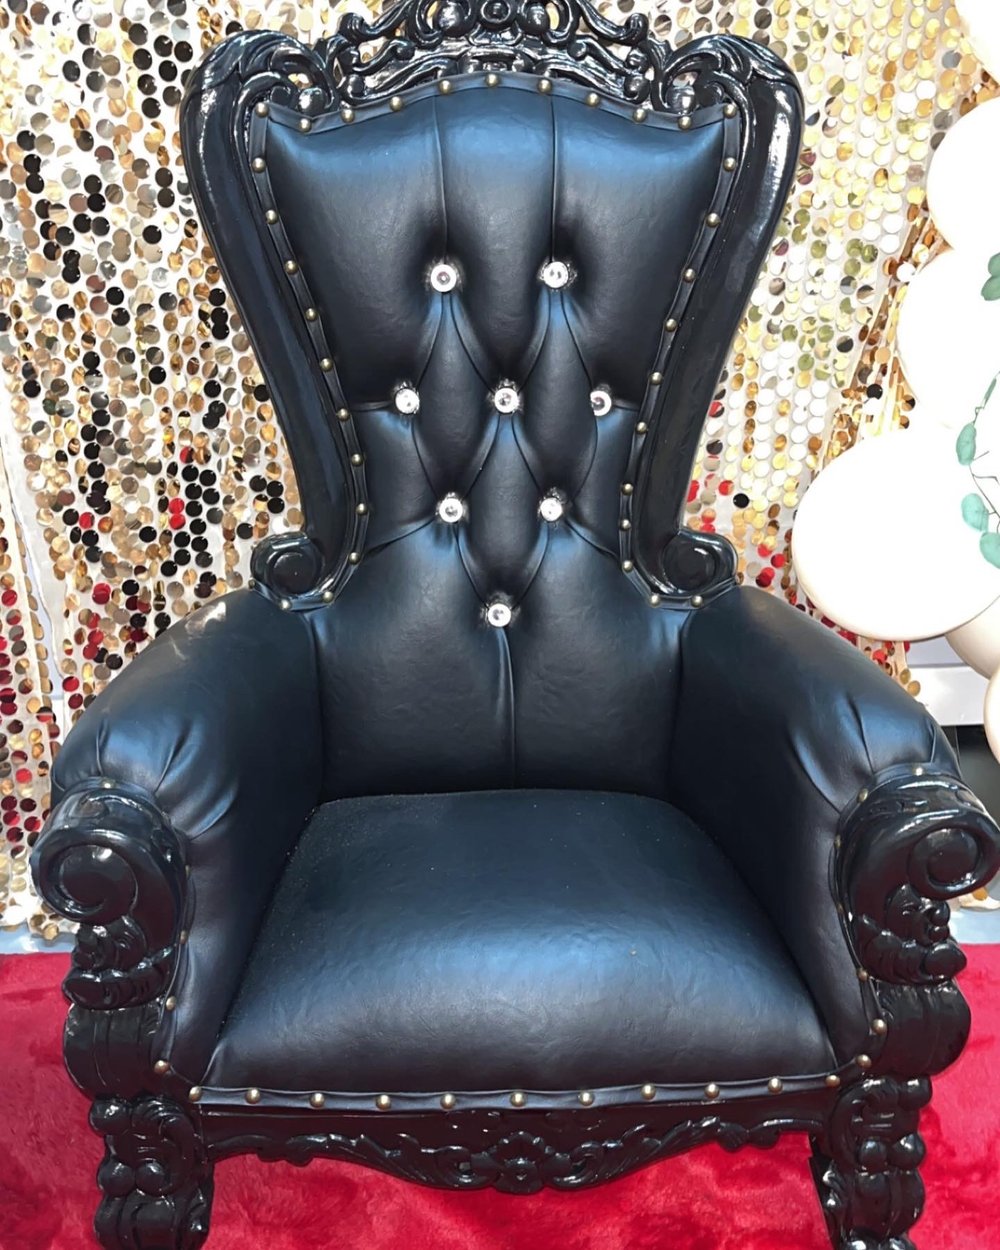 Black throne chair (Kids) ($80 base rental price)